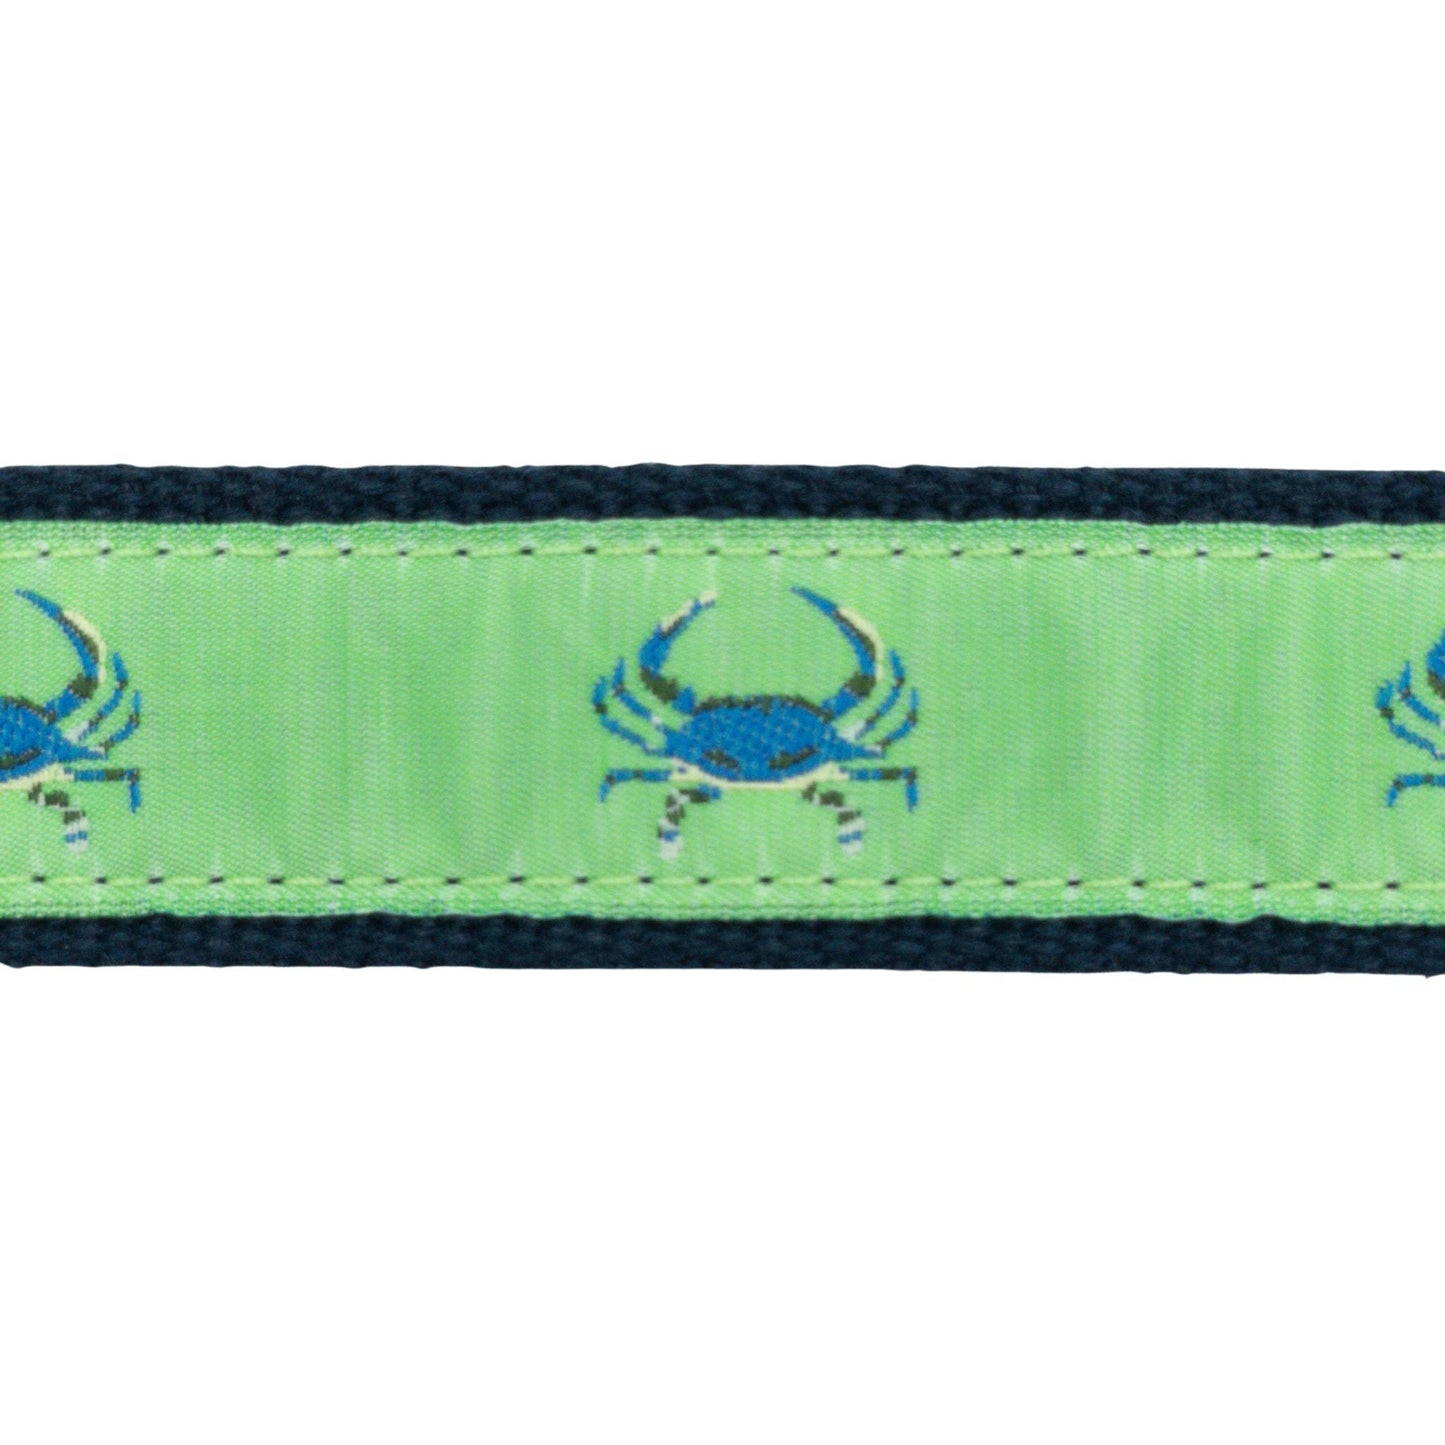 Embroidered Ribbon Belt - FINAL SALE